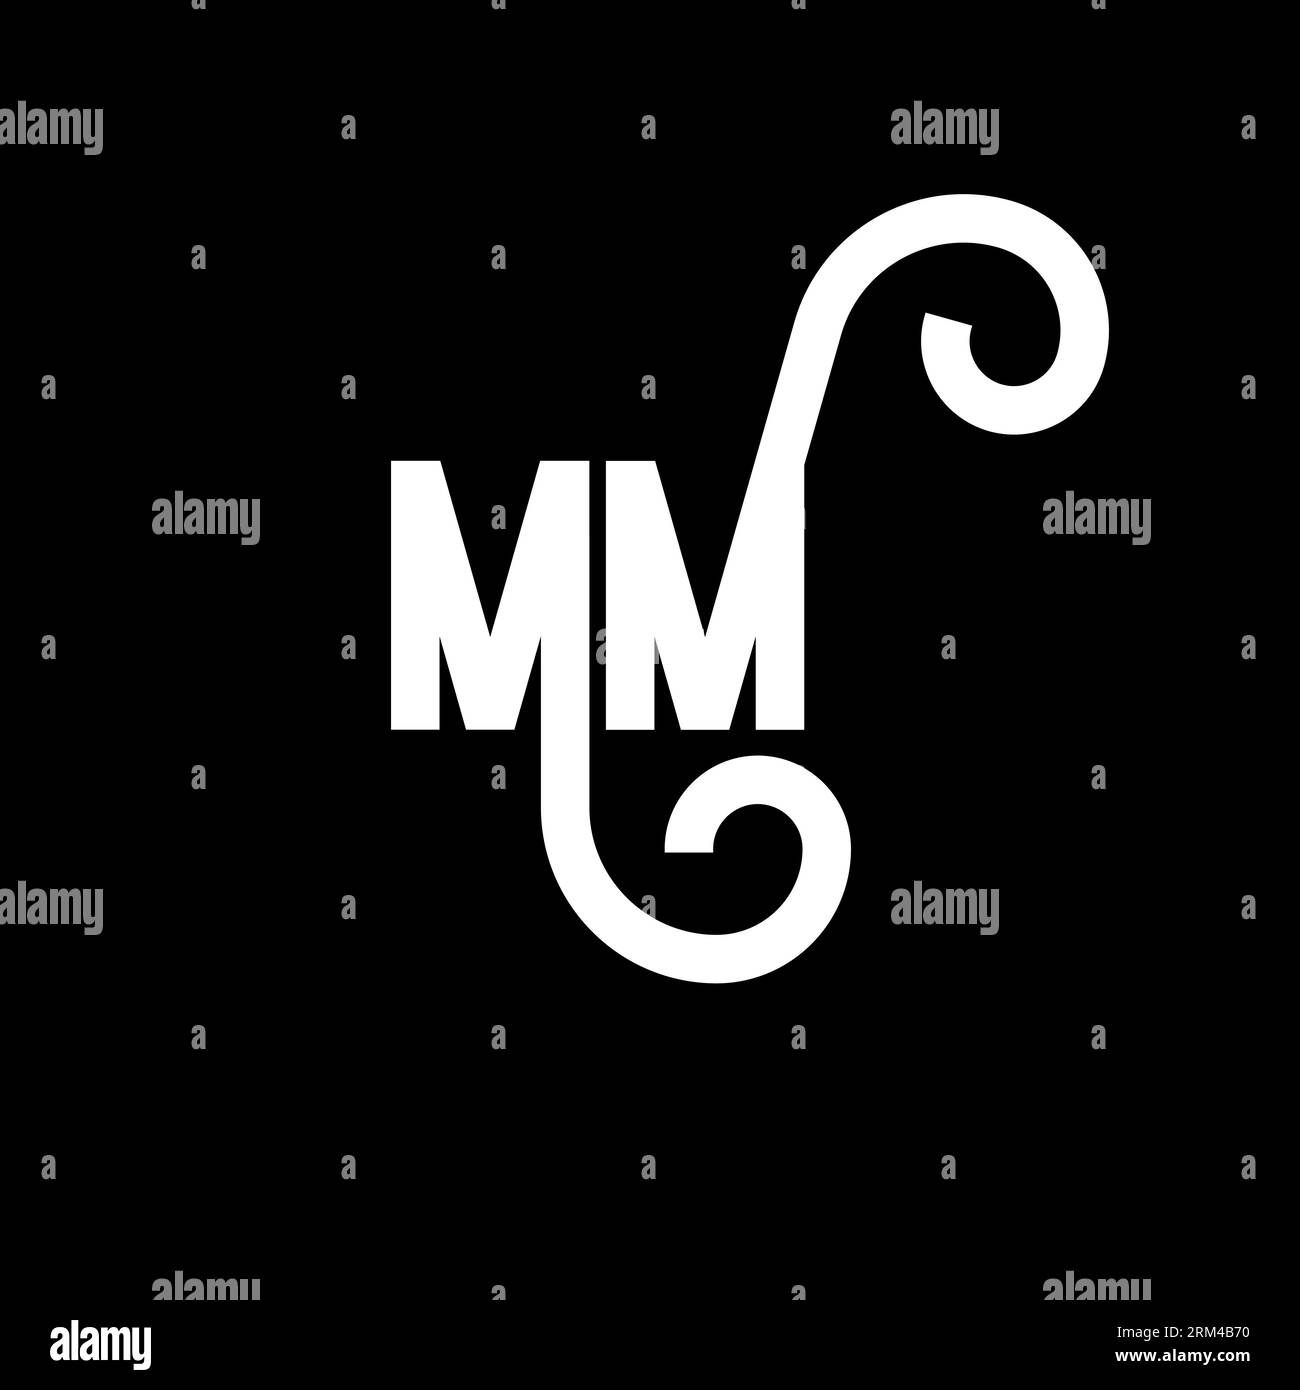 Premium Vector  Premium and elegant initials letter m or mm logo vector  design with vintage touch